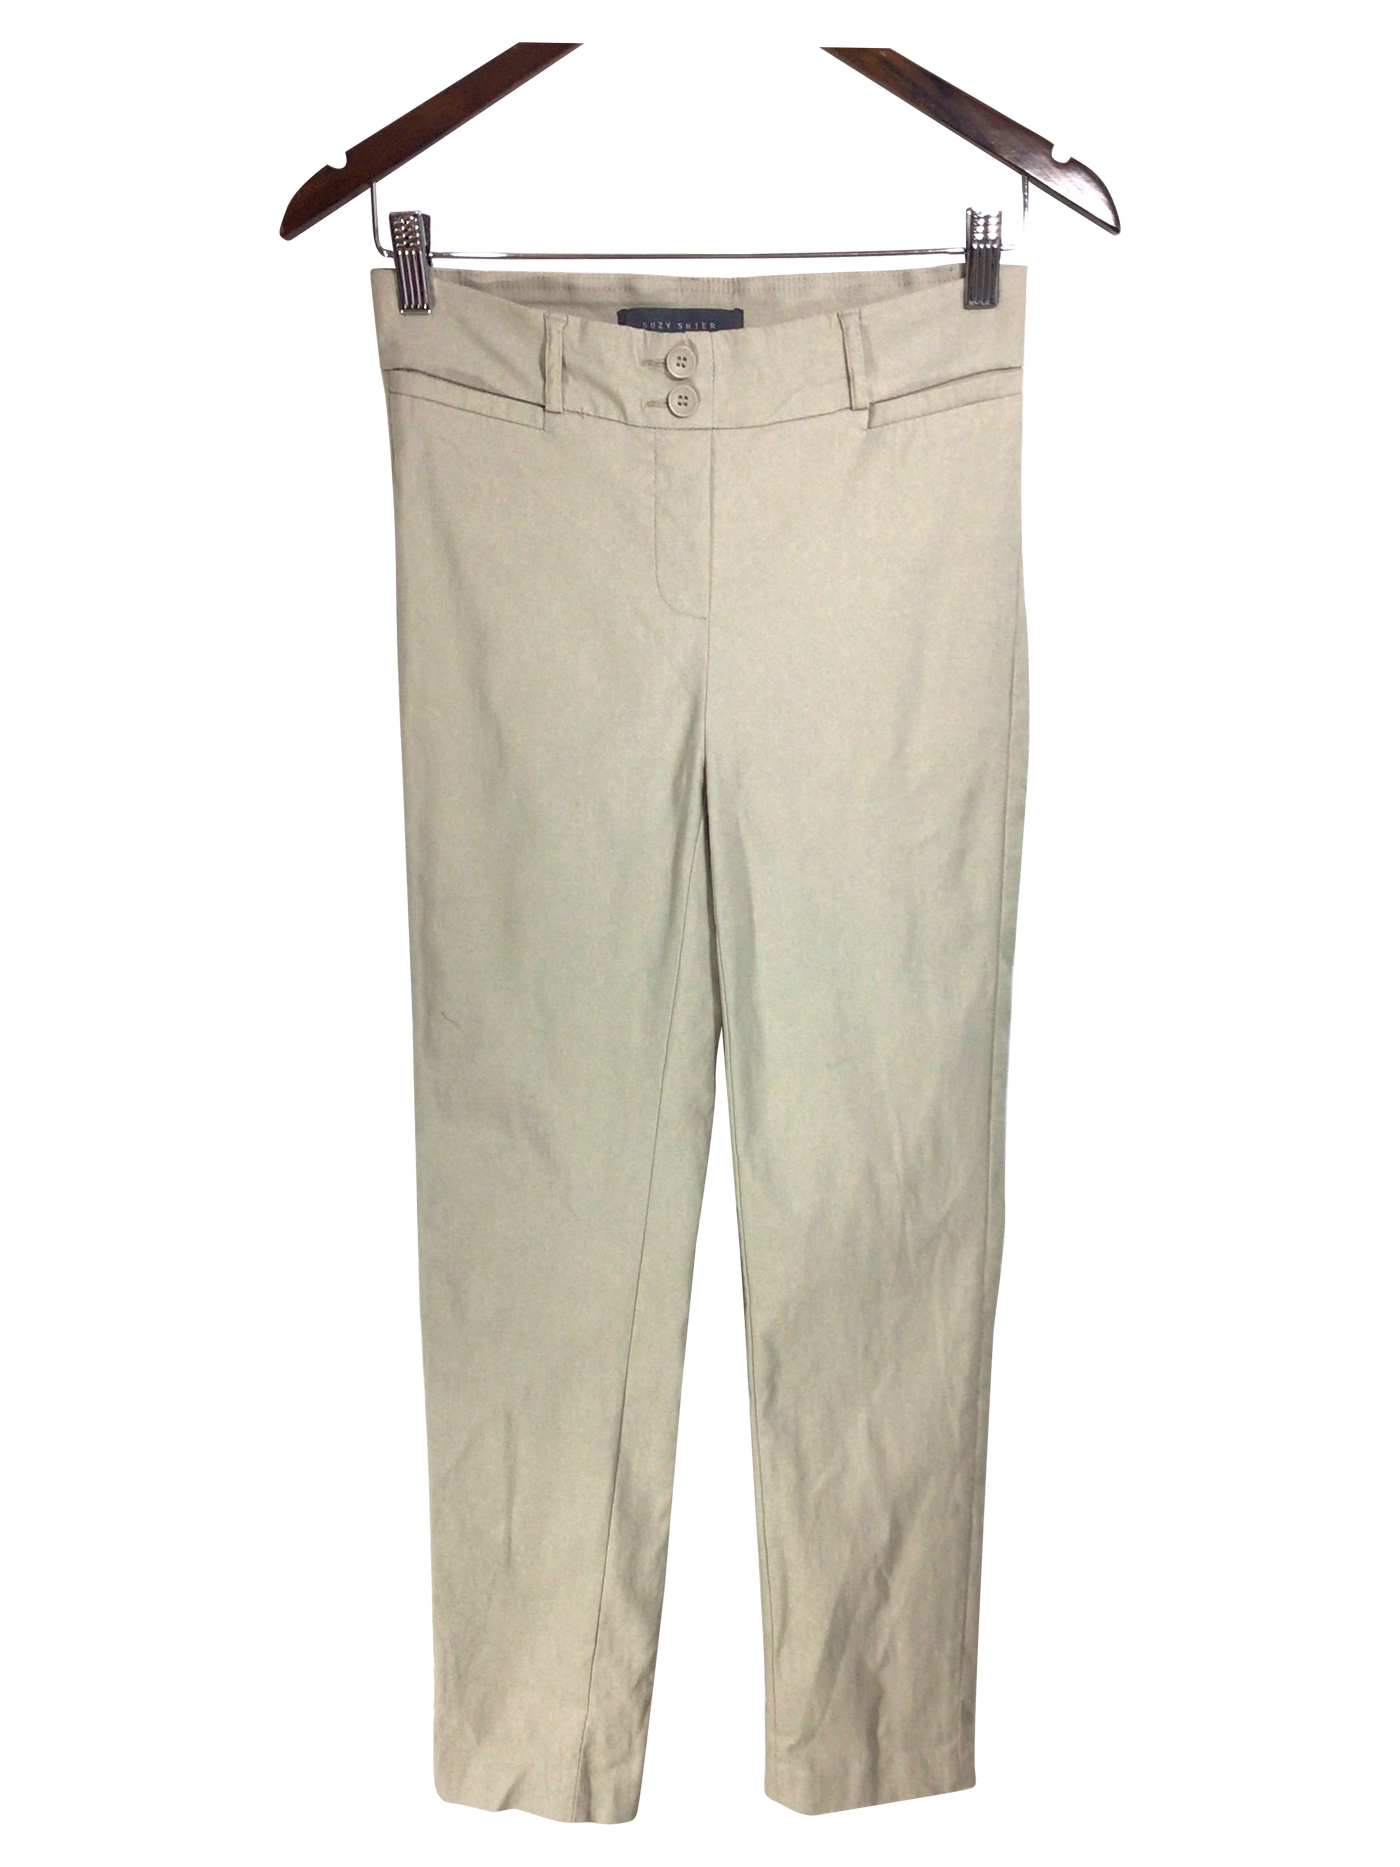 SUZY SHIER Women Work Pants Regular fit in Beige - Size S | 12.39 $ KOOP